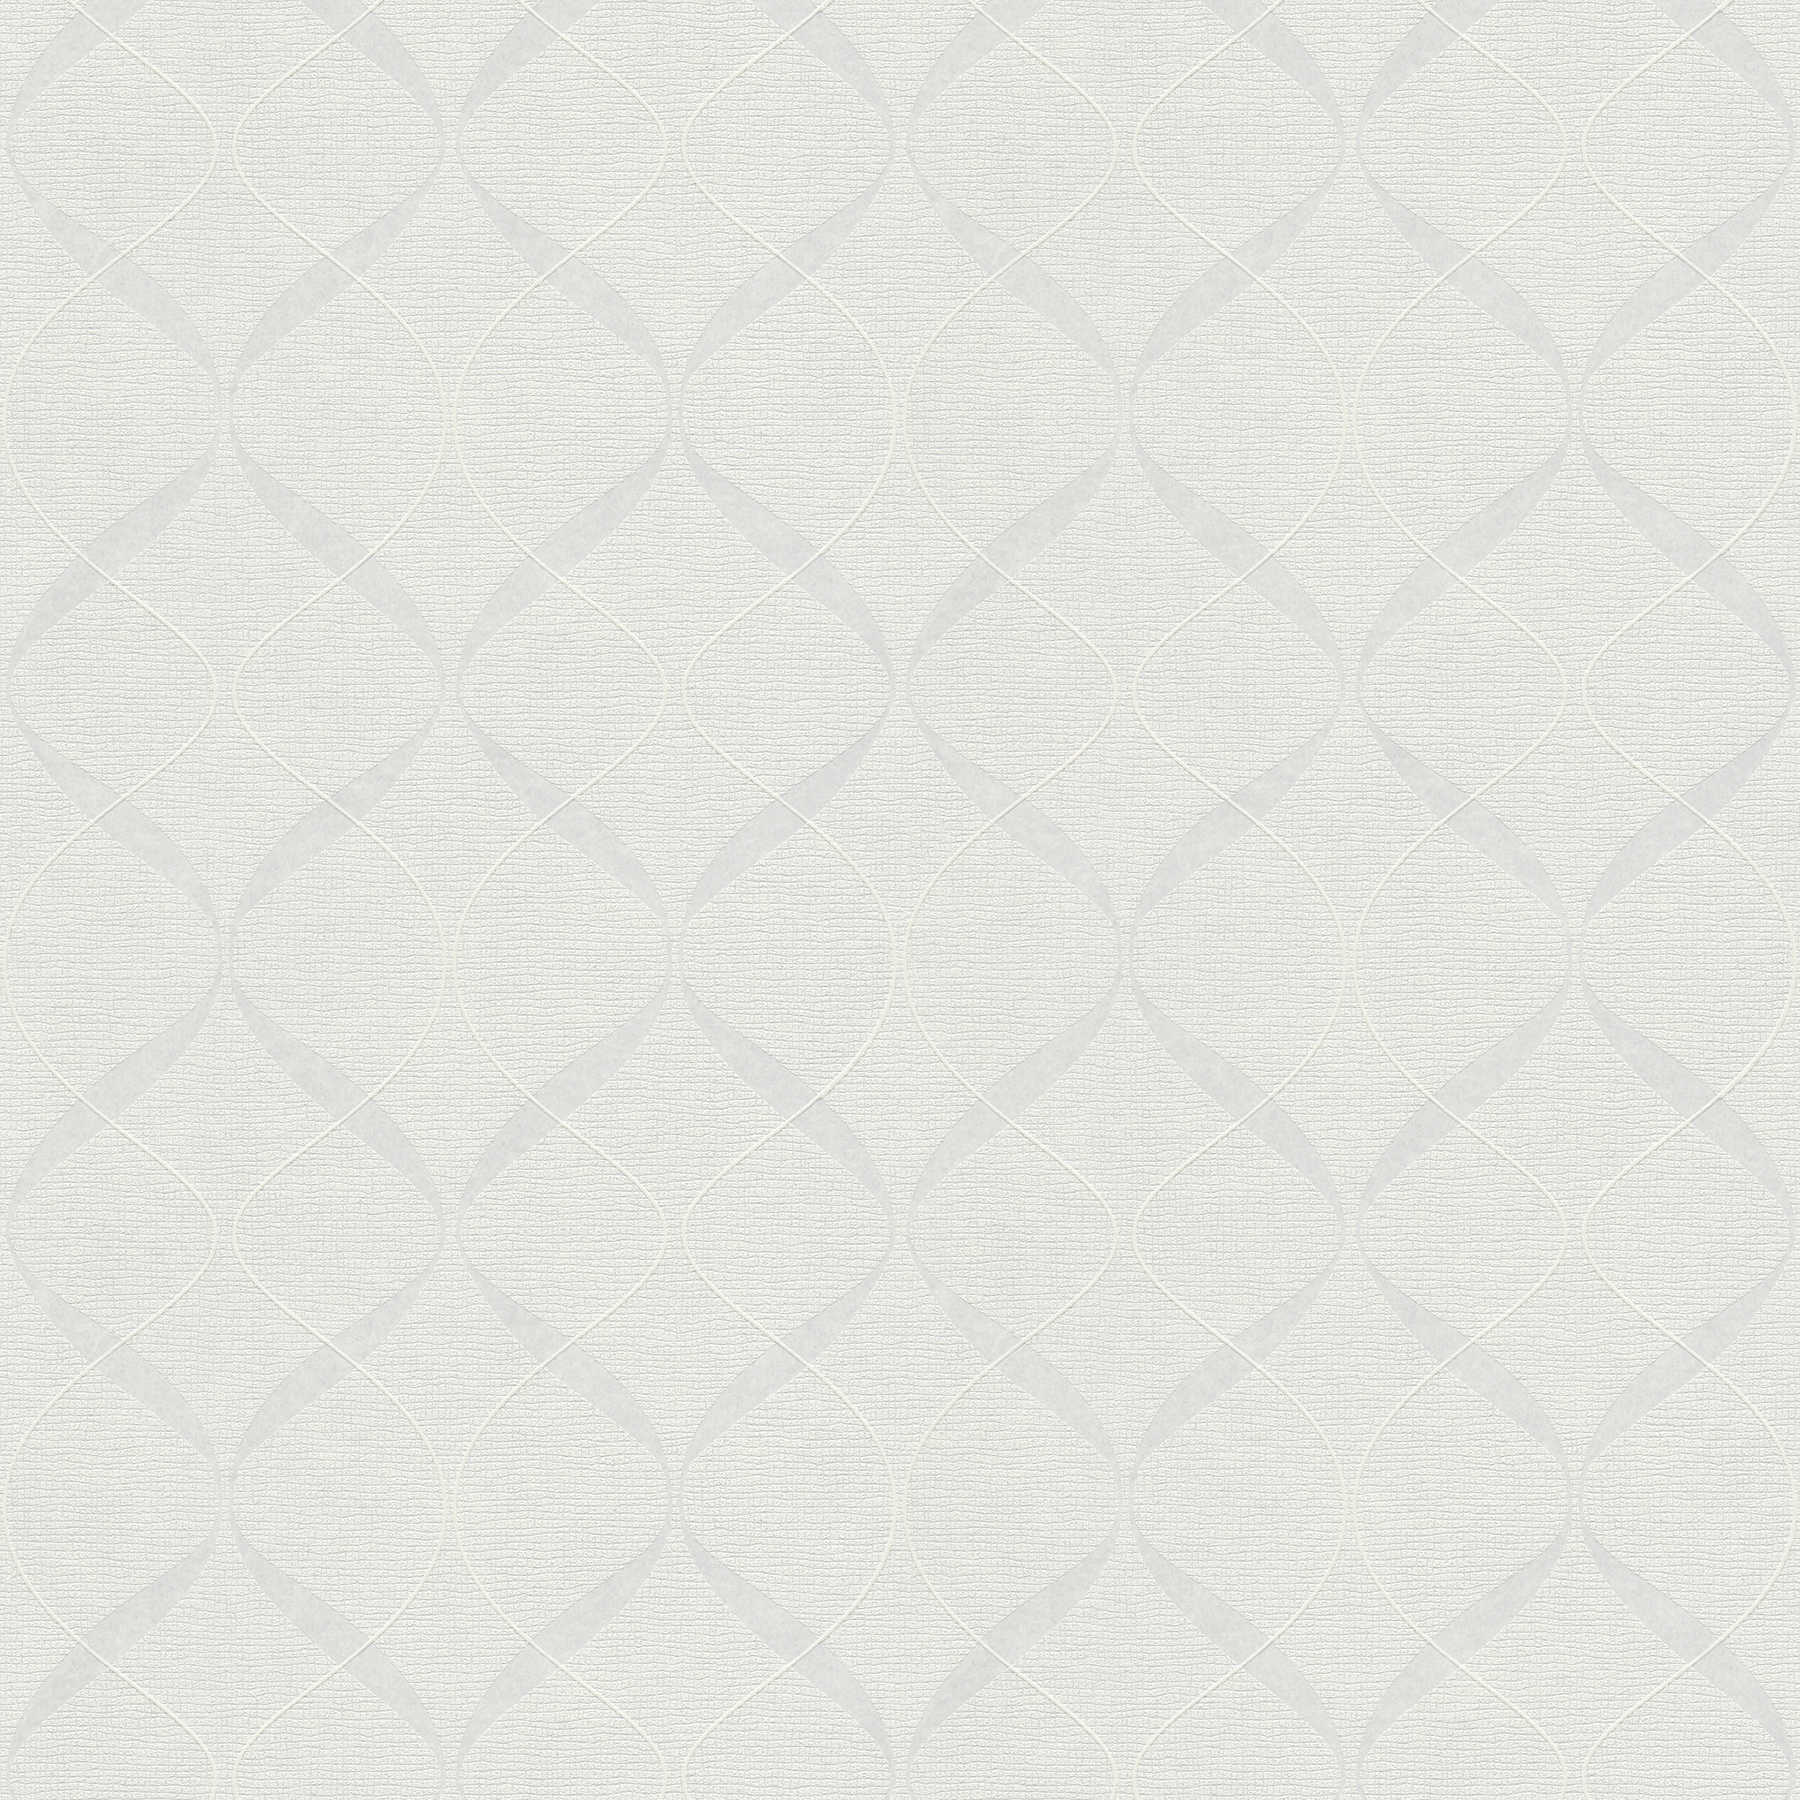 Non-woven wallpaper 3D textured pattern in 60s retro style - White
